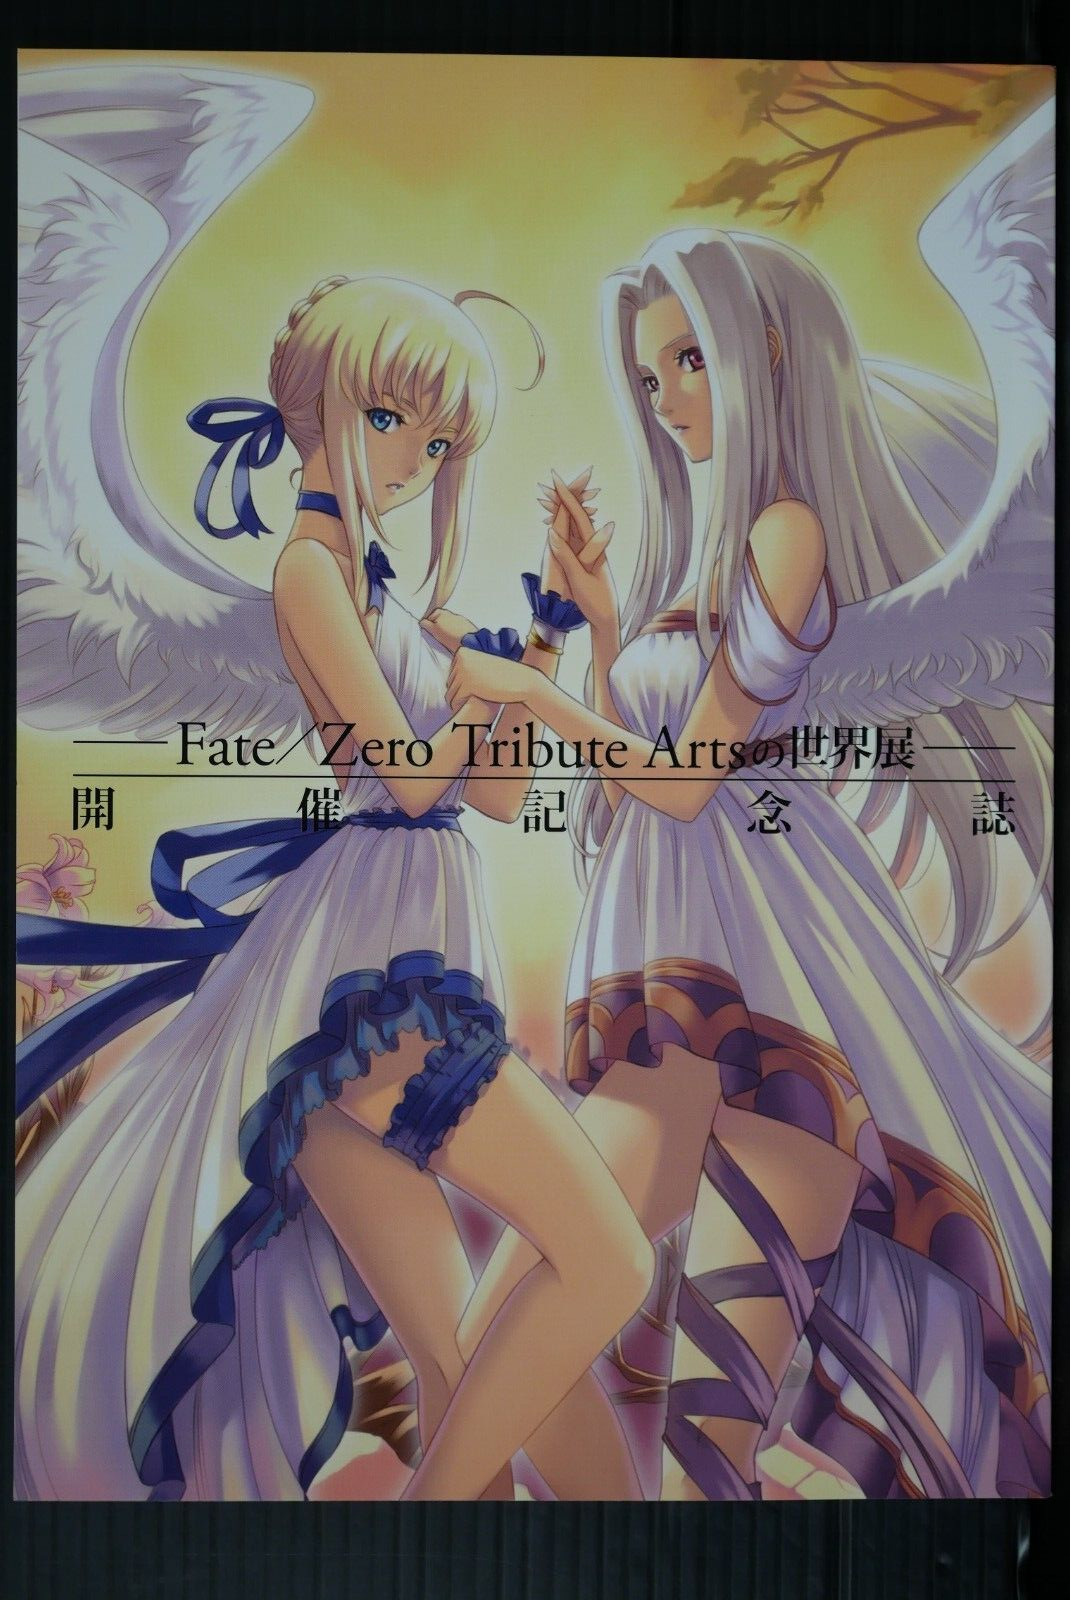 Fate/Zero Tribute Arts Exhibition Commemorative Book (Huke, Yoshitoshi Abe etc.)